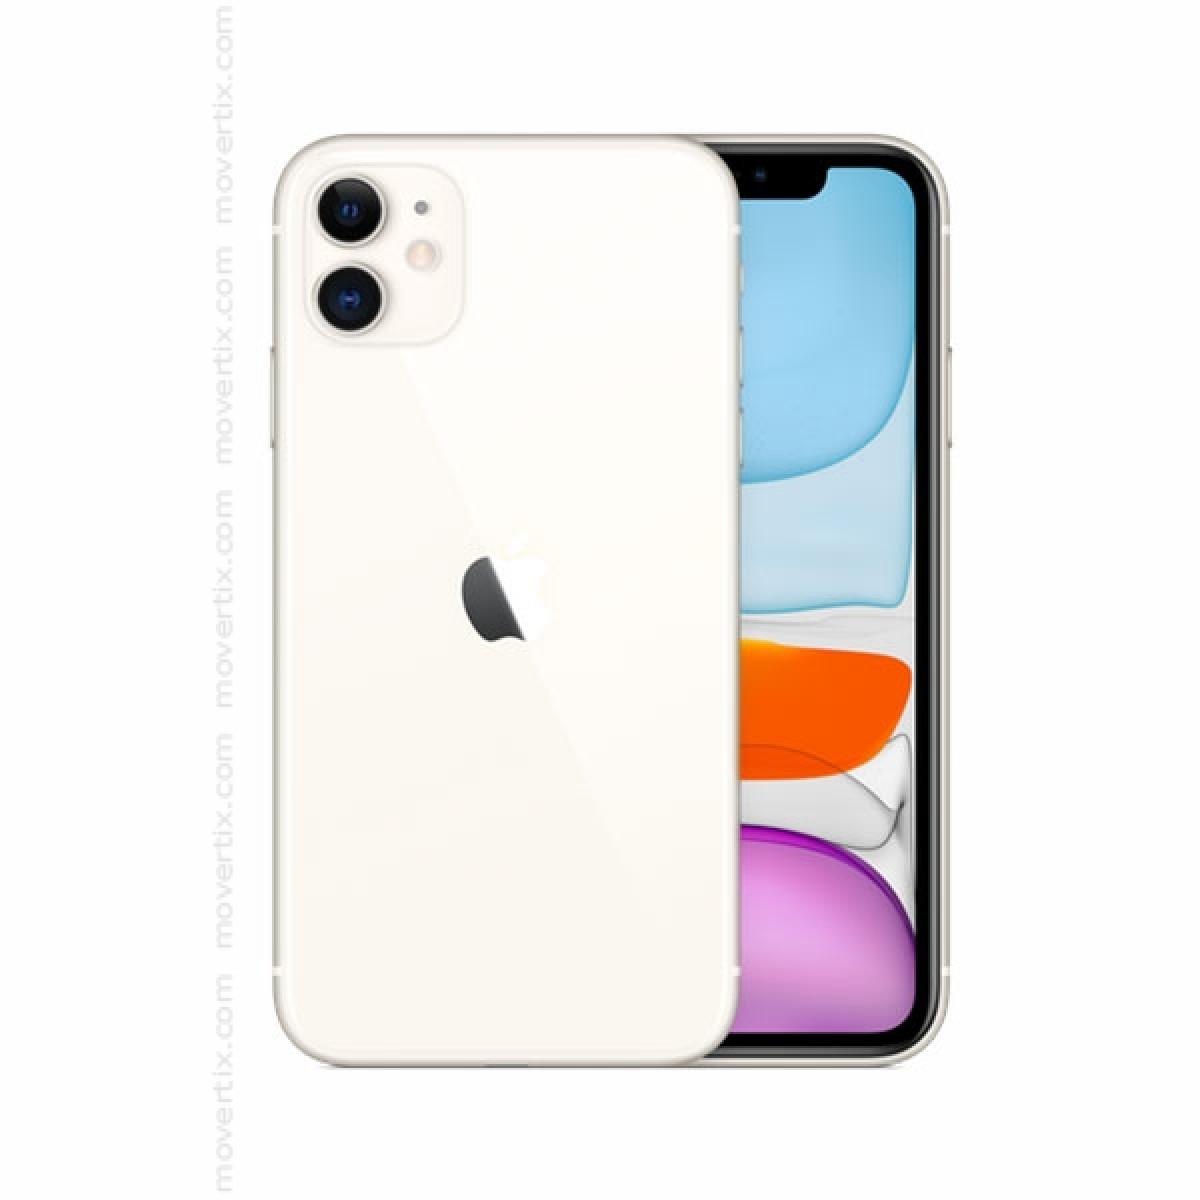 iPhone 11 White 128GB (0190199223721) | Movertix Mobile Phones Shop